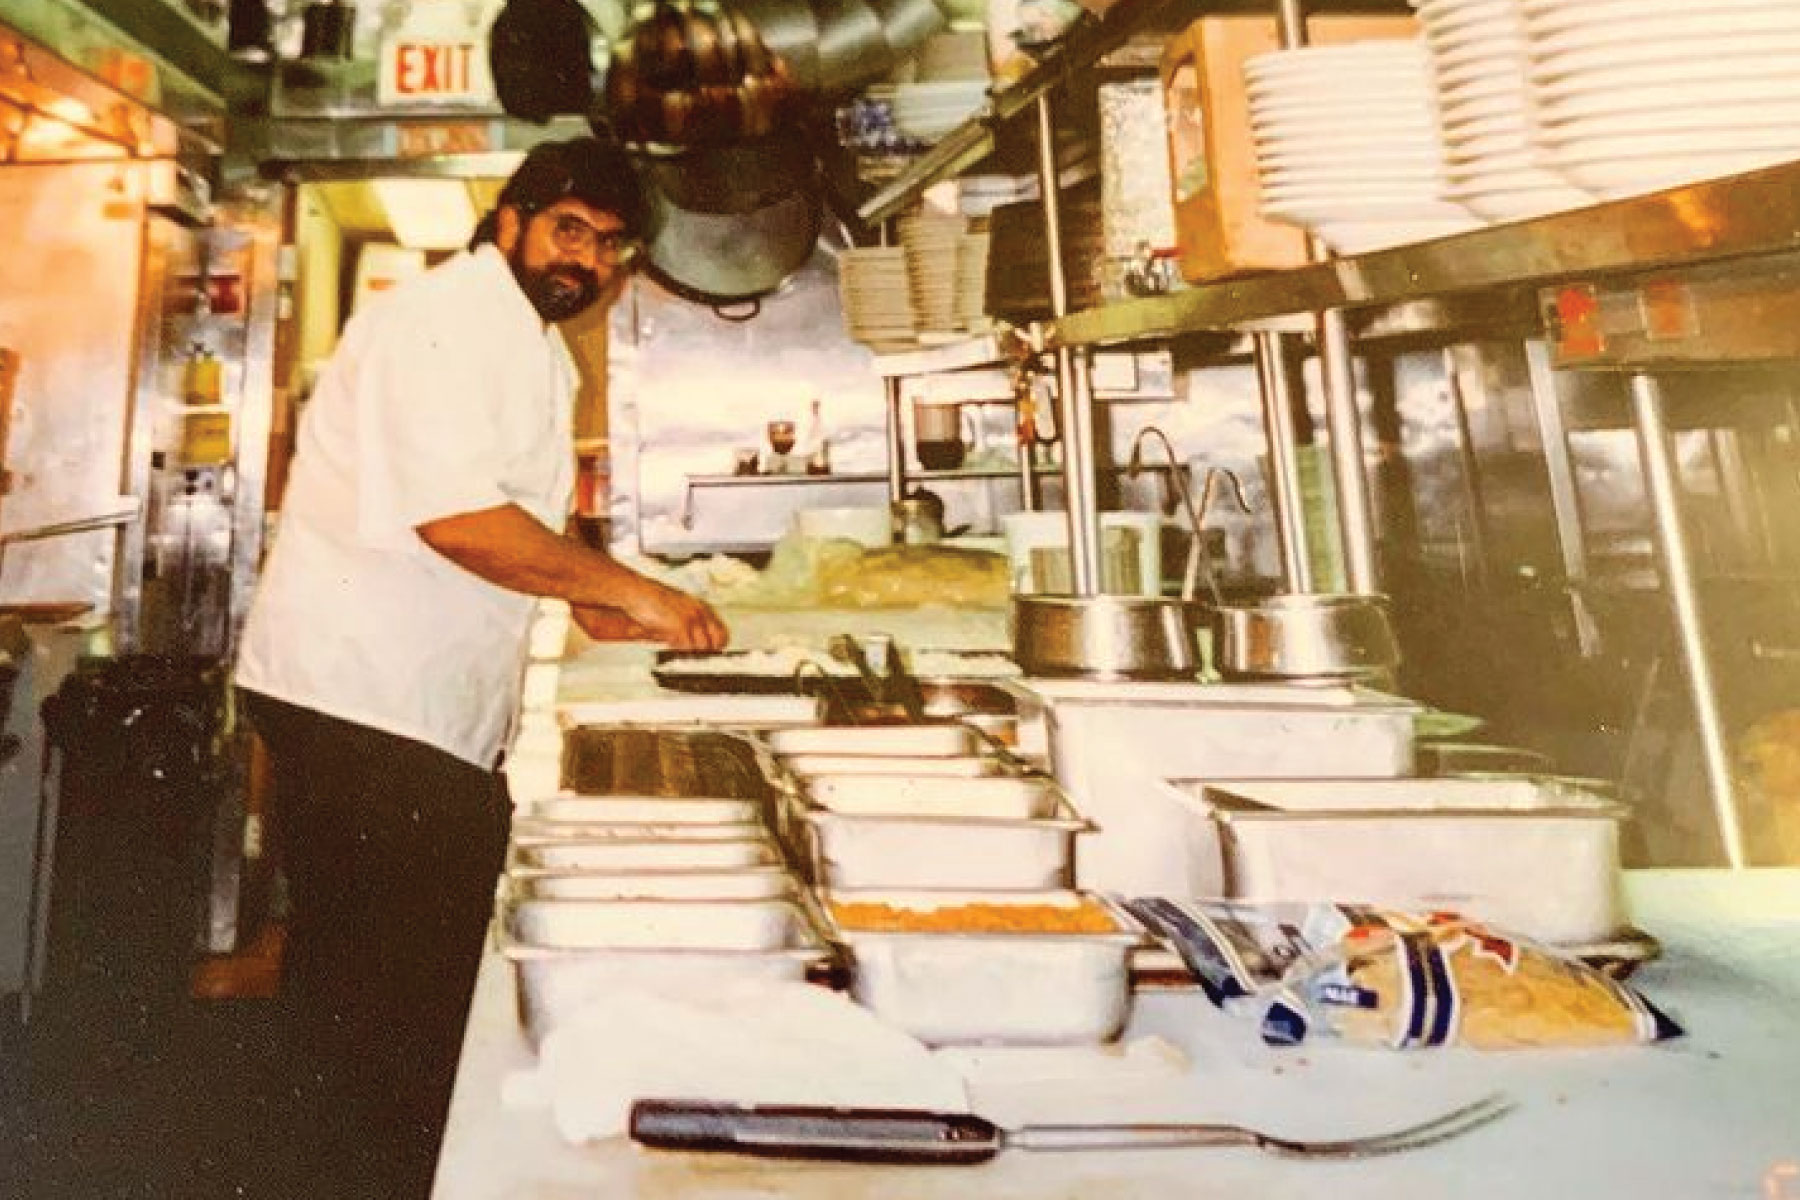 Joe's father Arthur Isidori at work in the kitchen